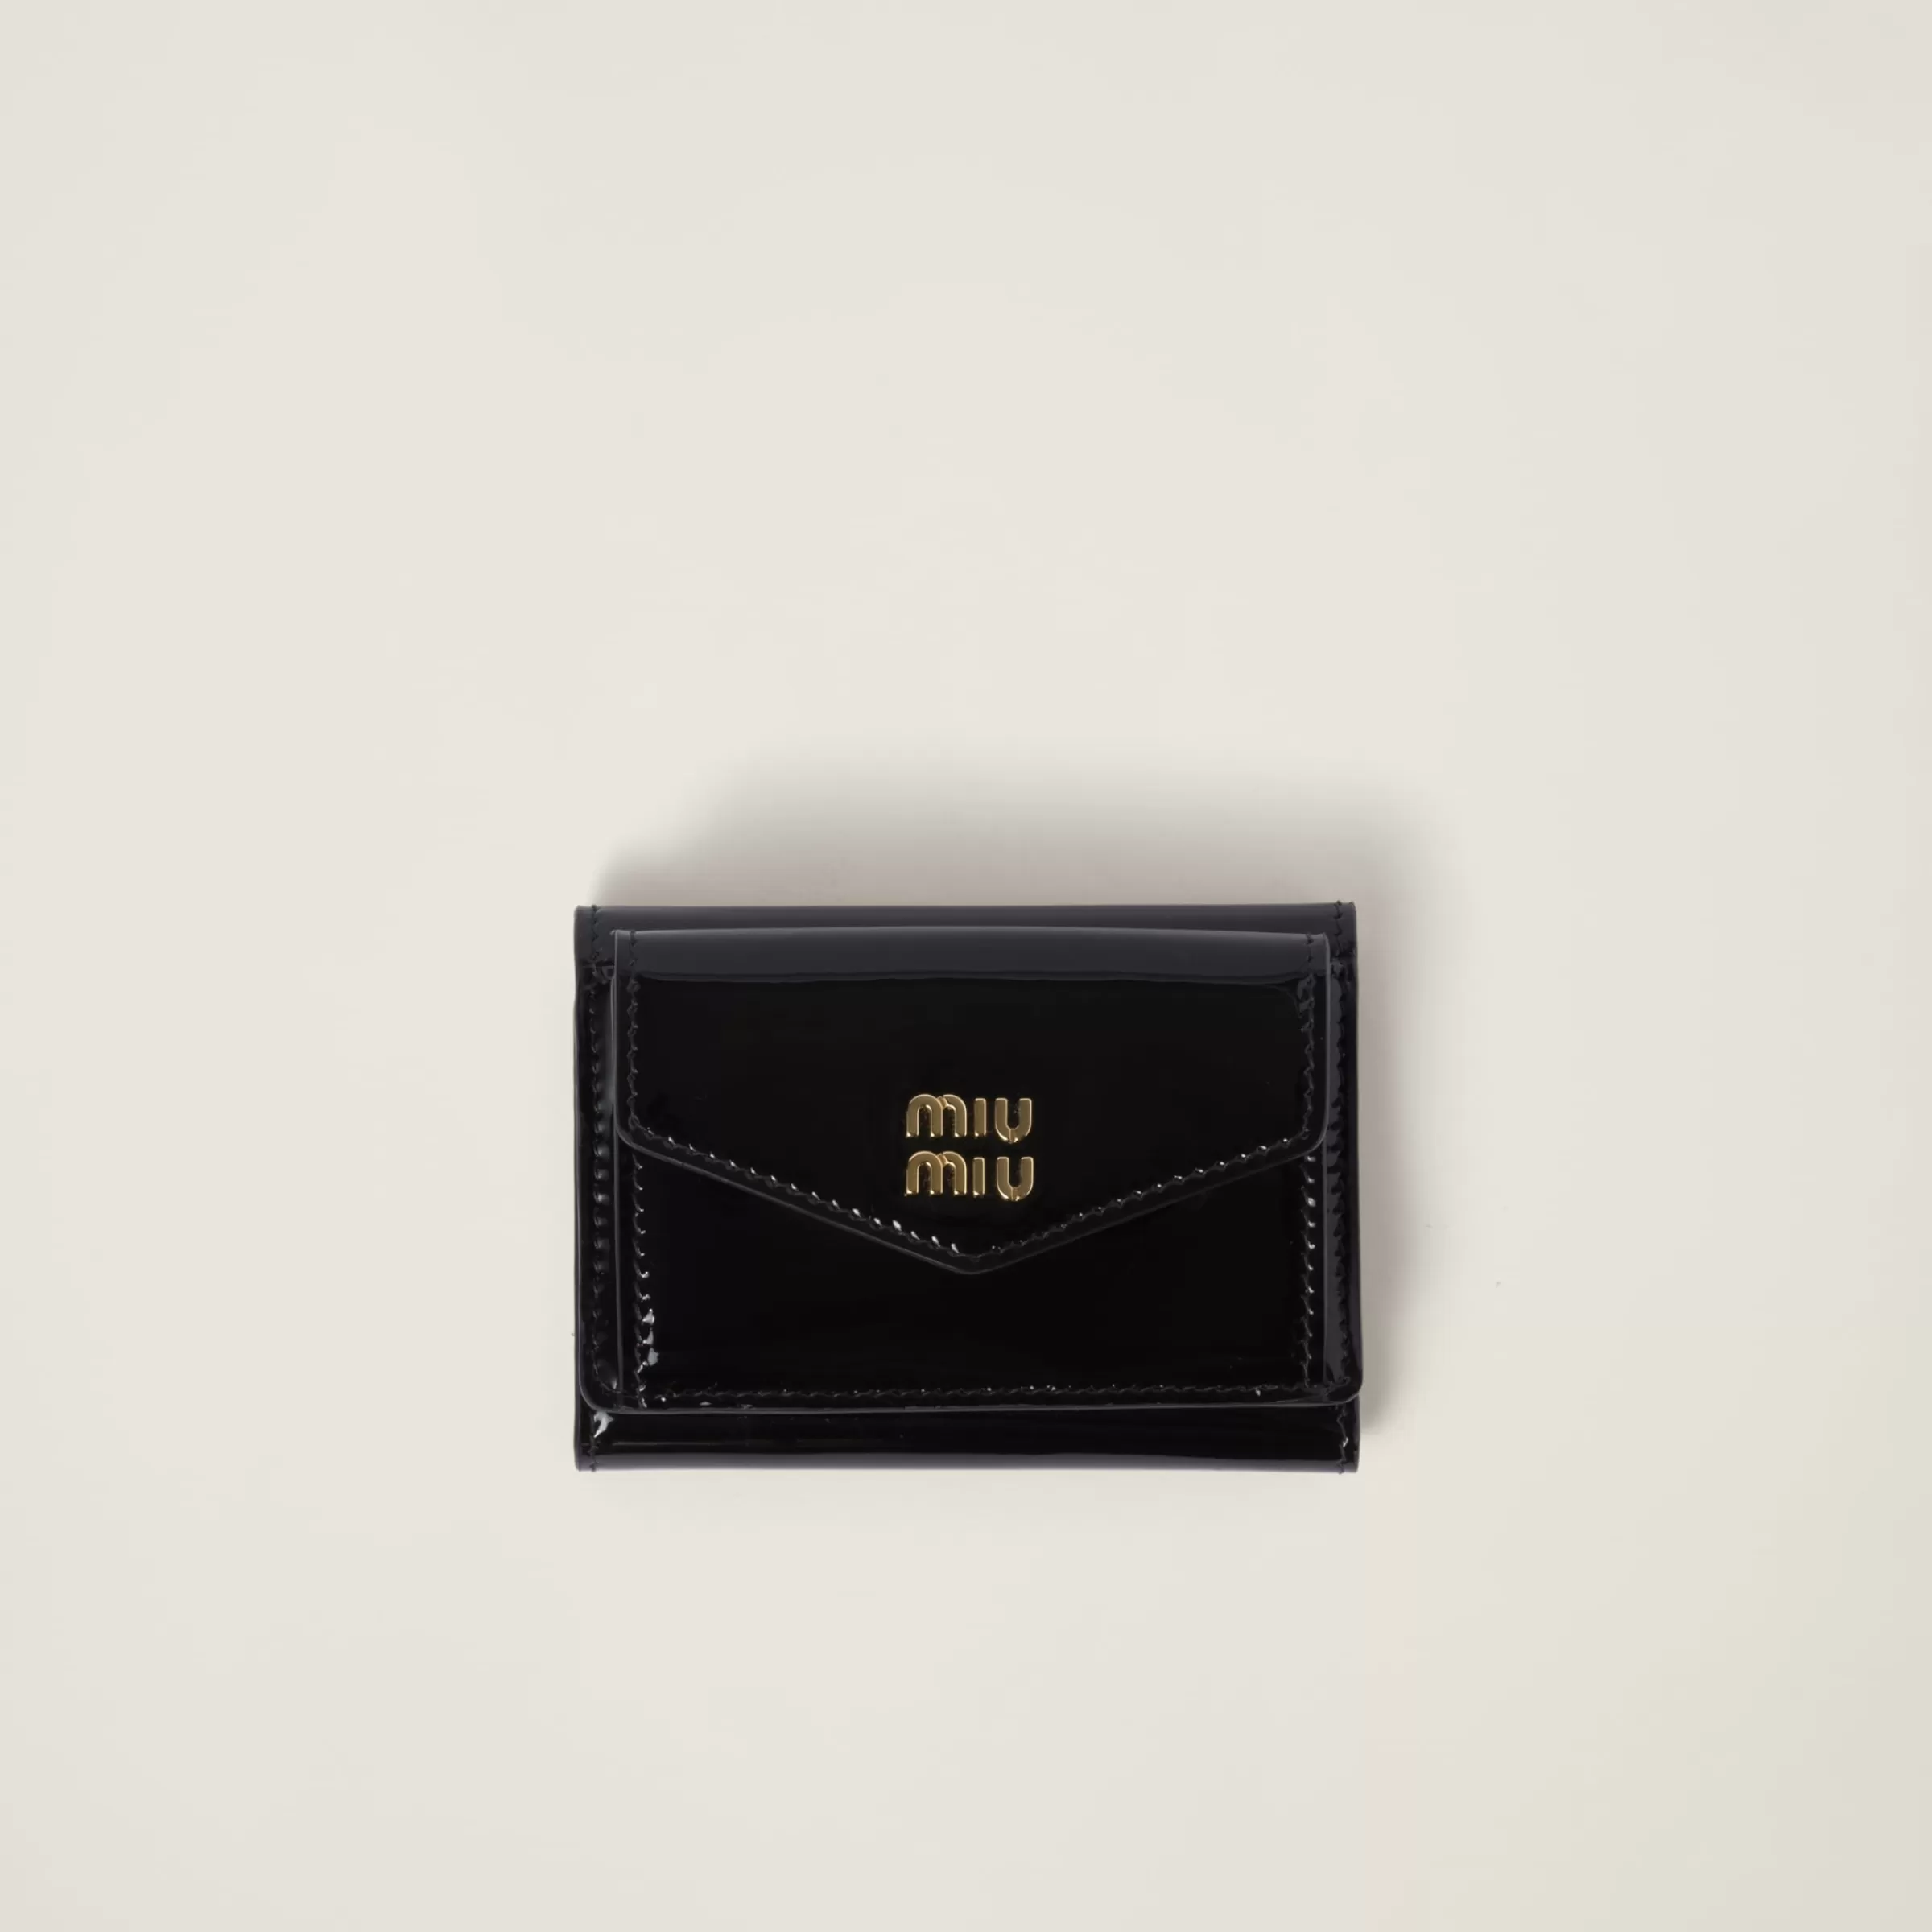 Miu Miu Small Patent Leather Wallet |